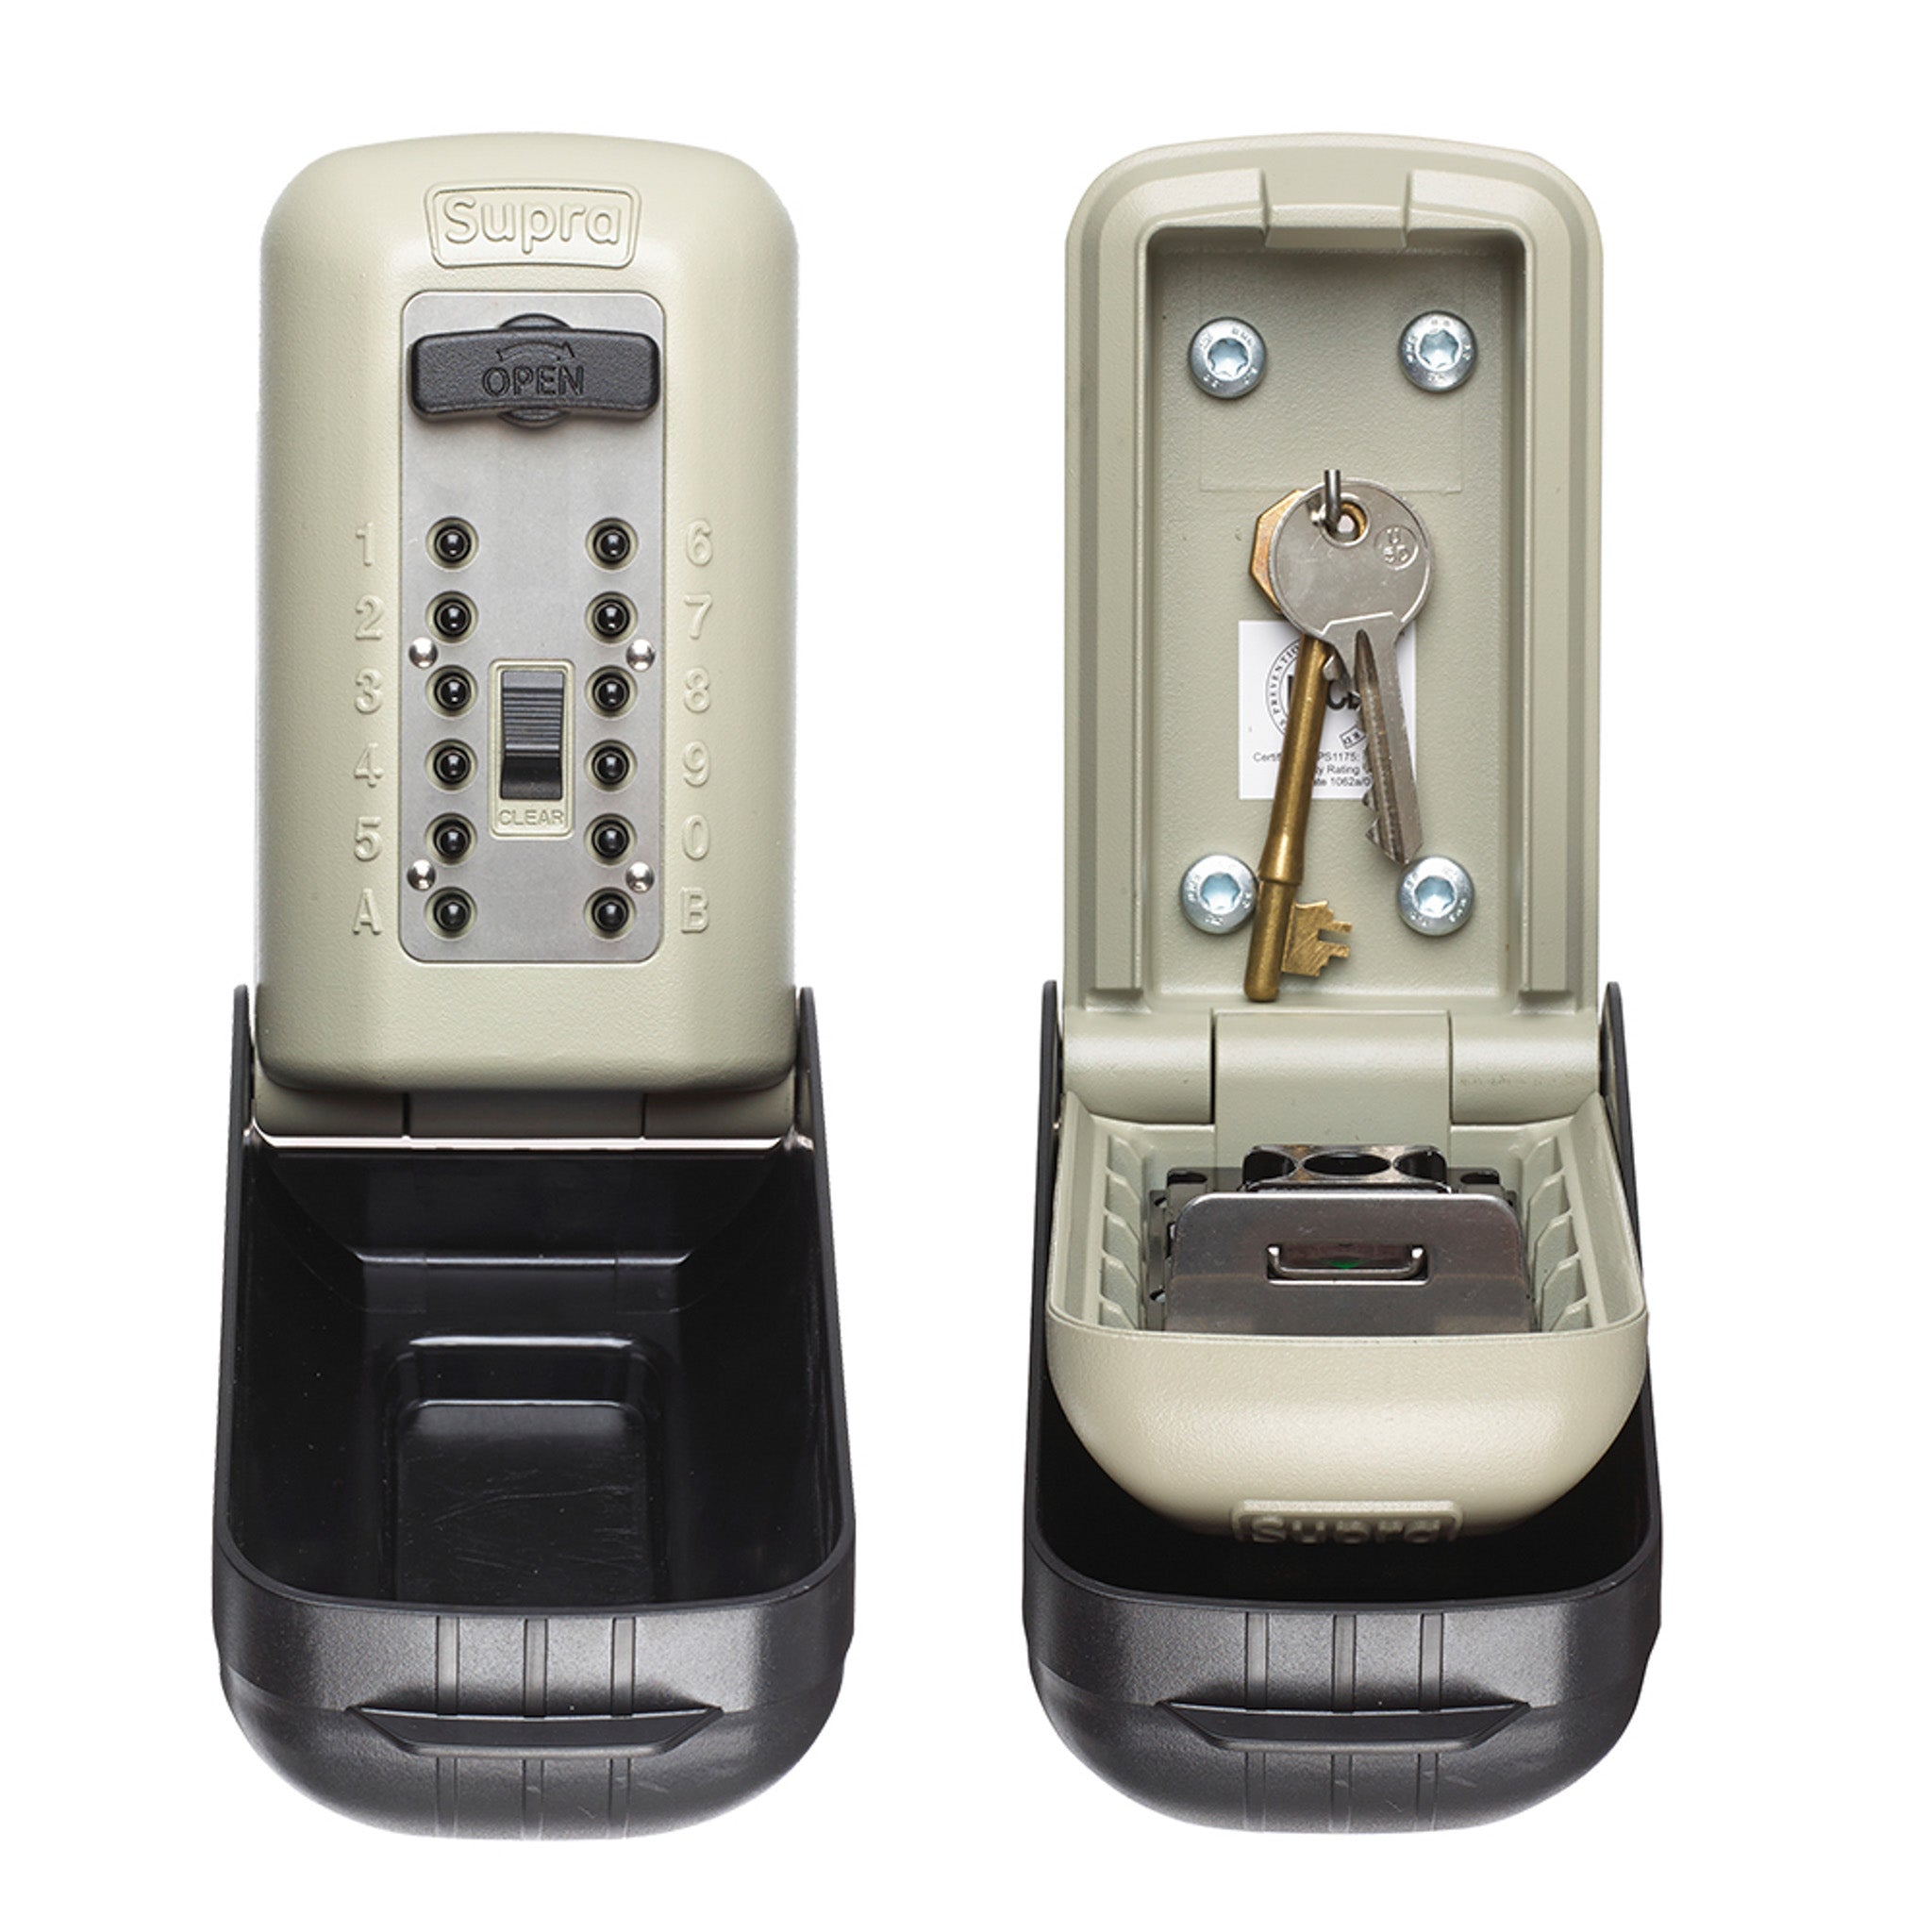 2 supra c500 pro key safes side by side. One open with keys inside, both on white background